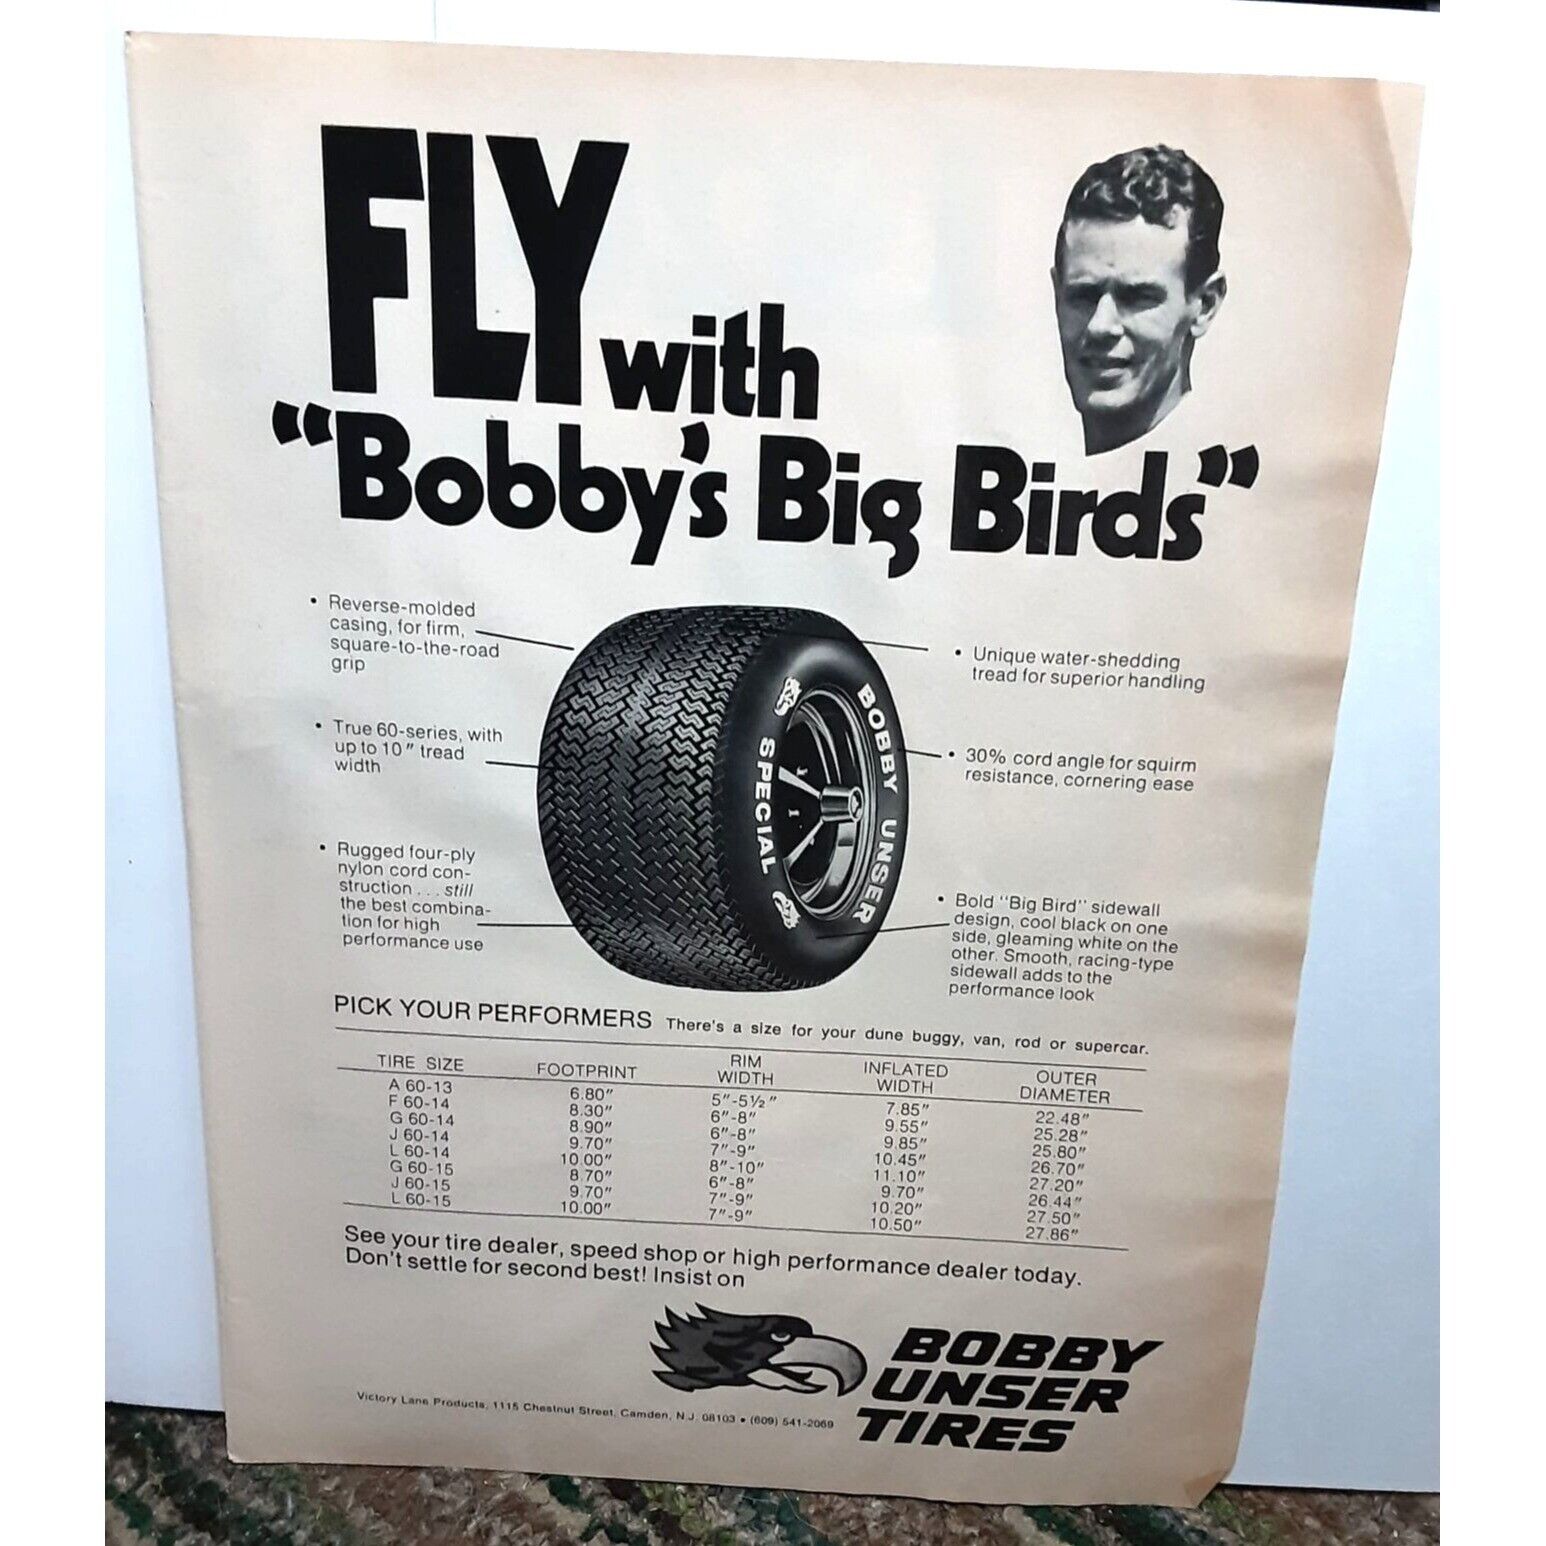 Vintage 1973 Bobby Unser Tires Print Ad Original